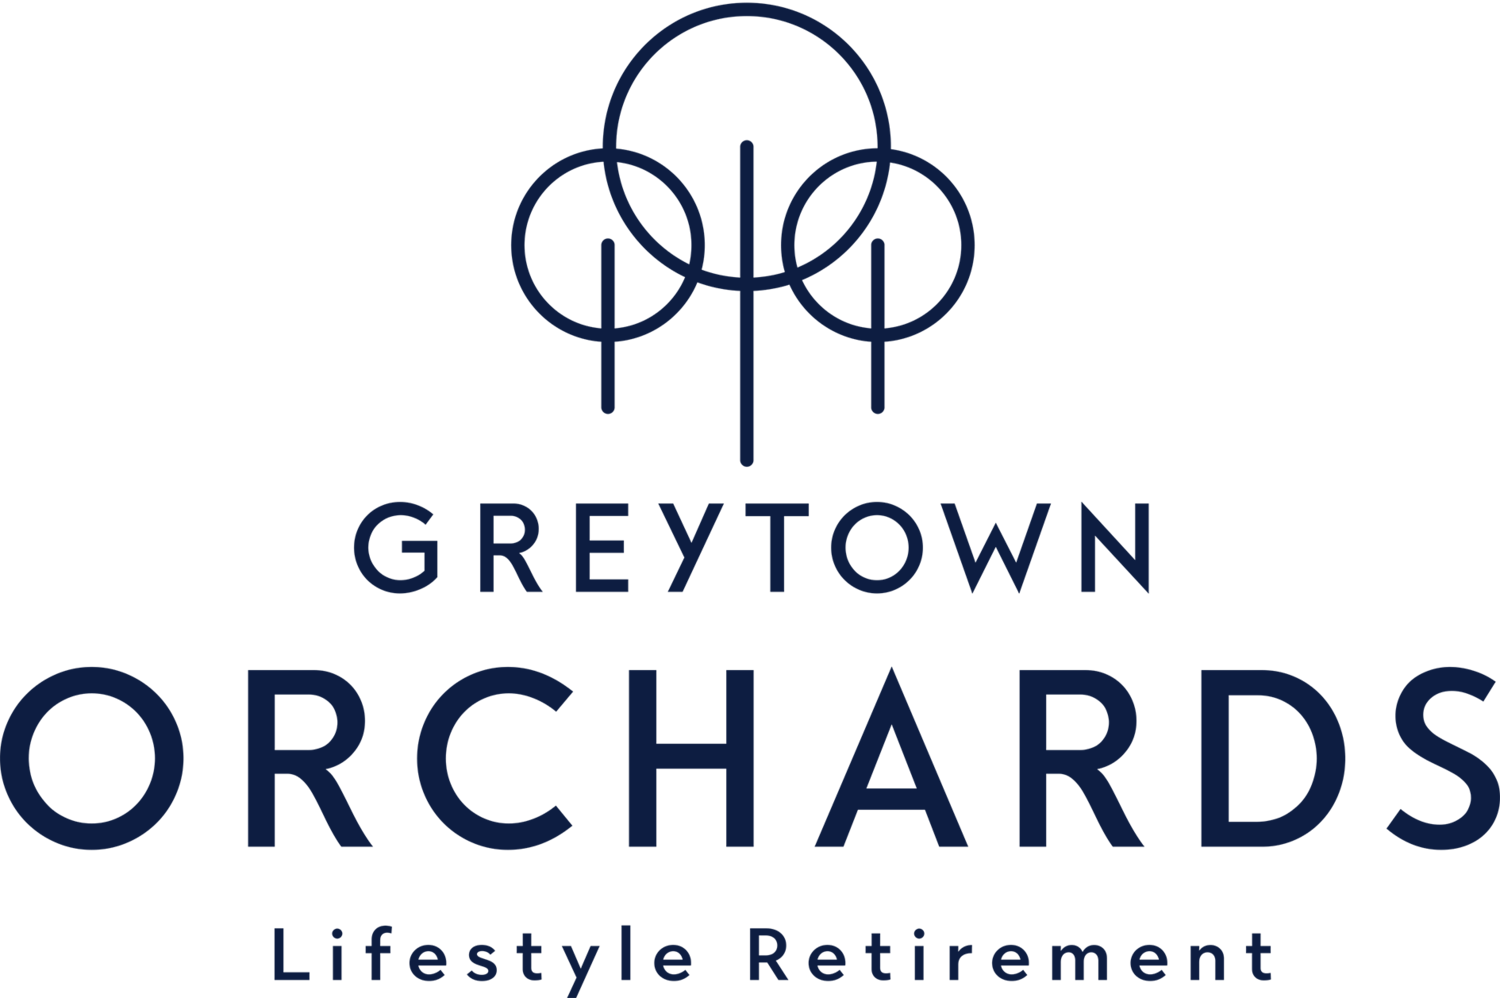 Greytowns Orchards Lifestyle Retirement logo